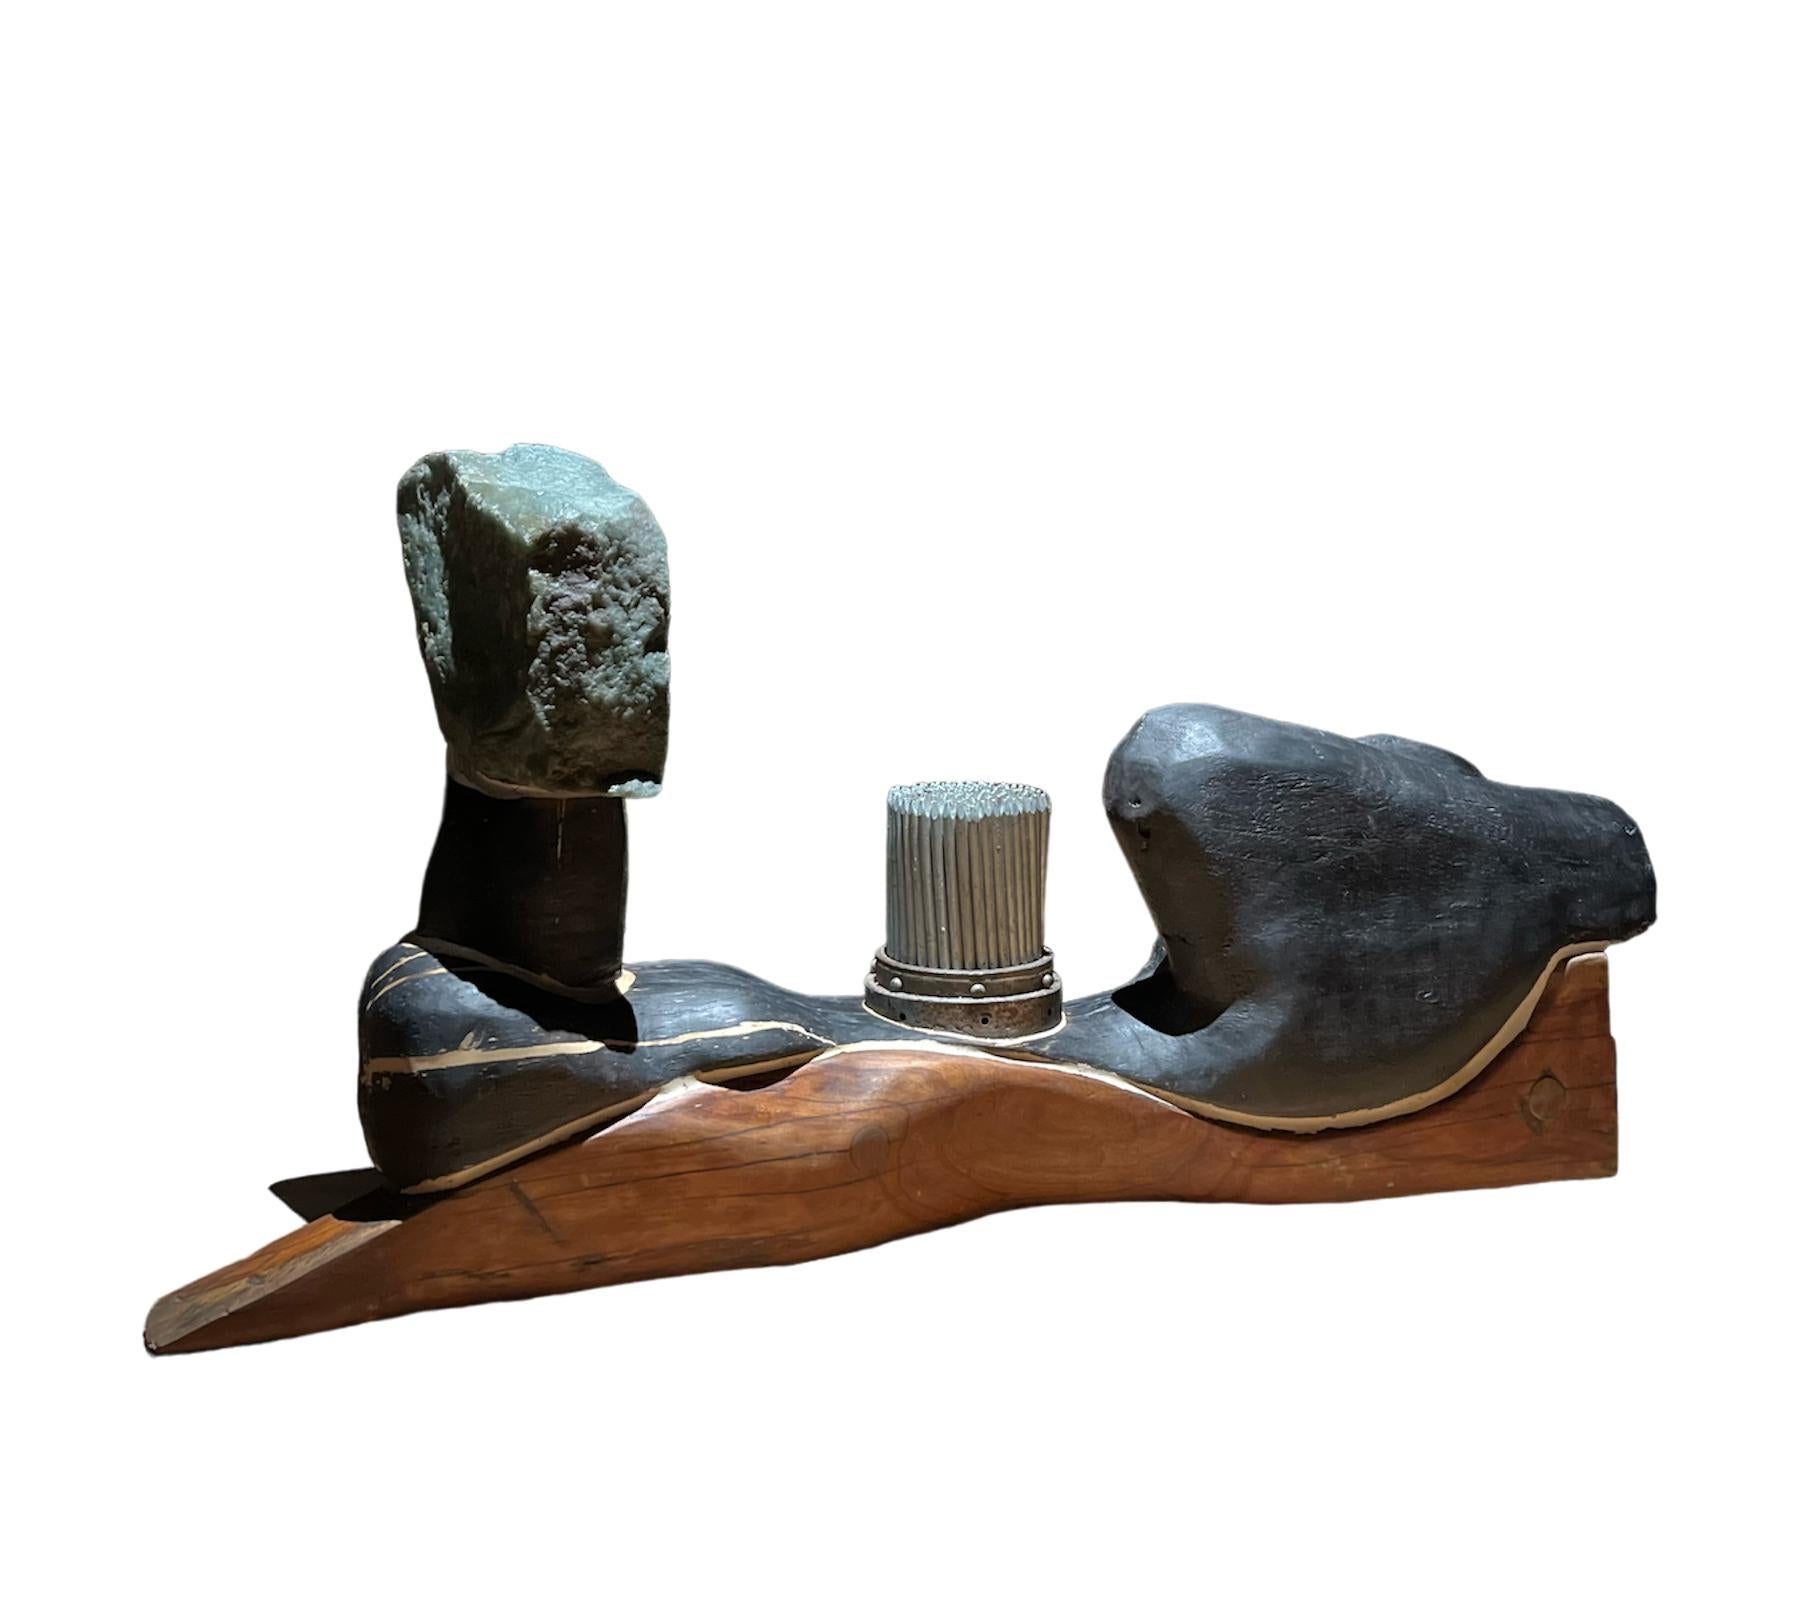 Ori Guerreira na luz III, sculpture figurative. Sculptures de la série